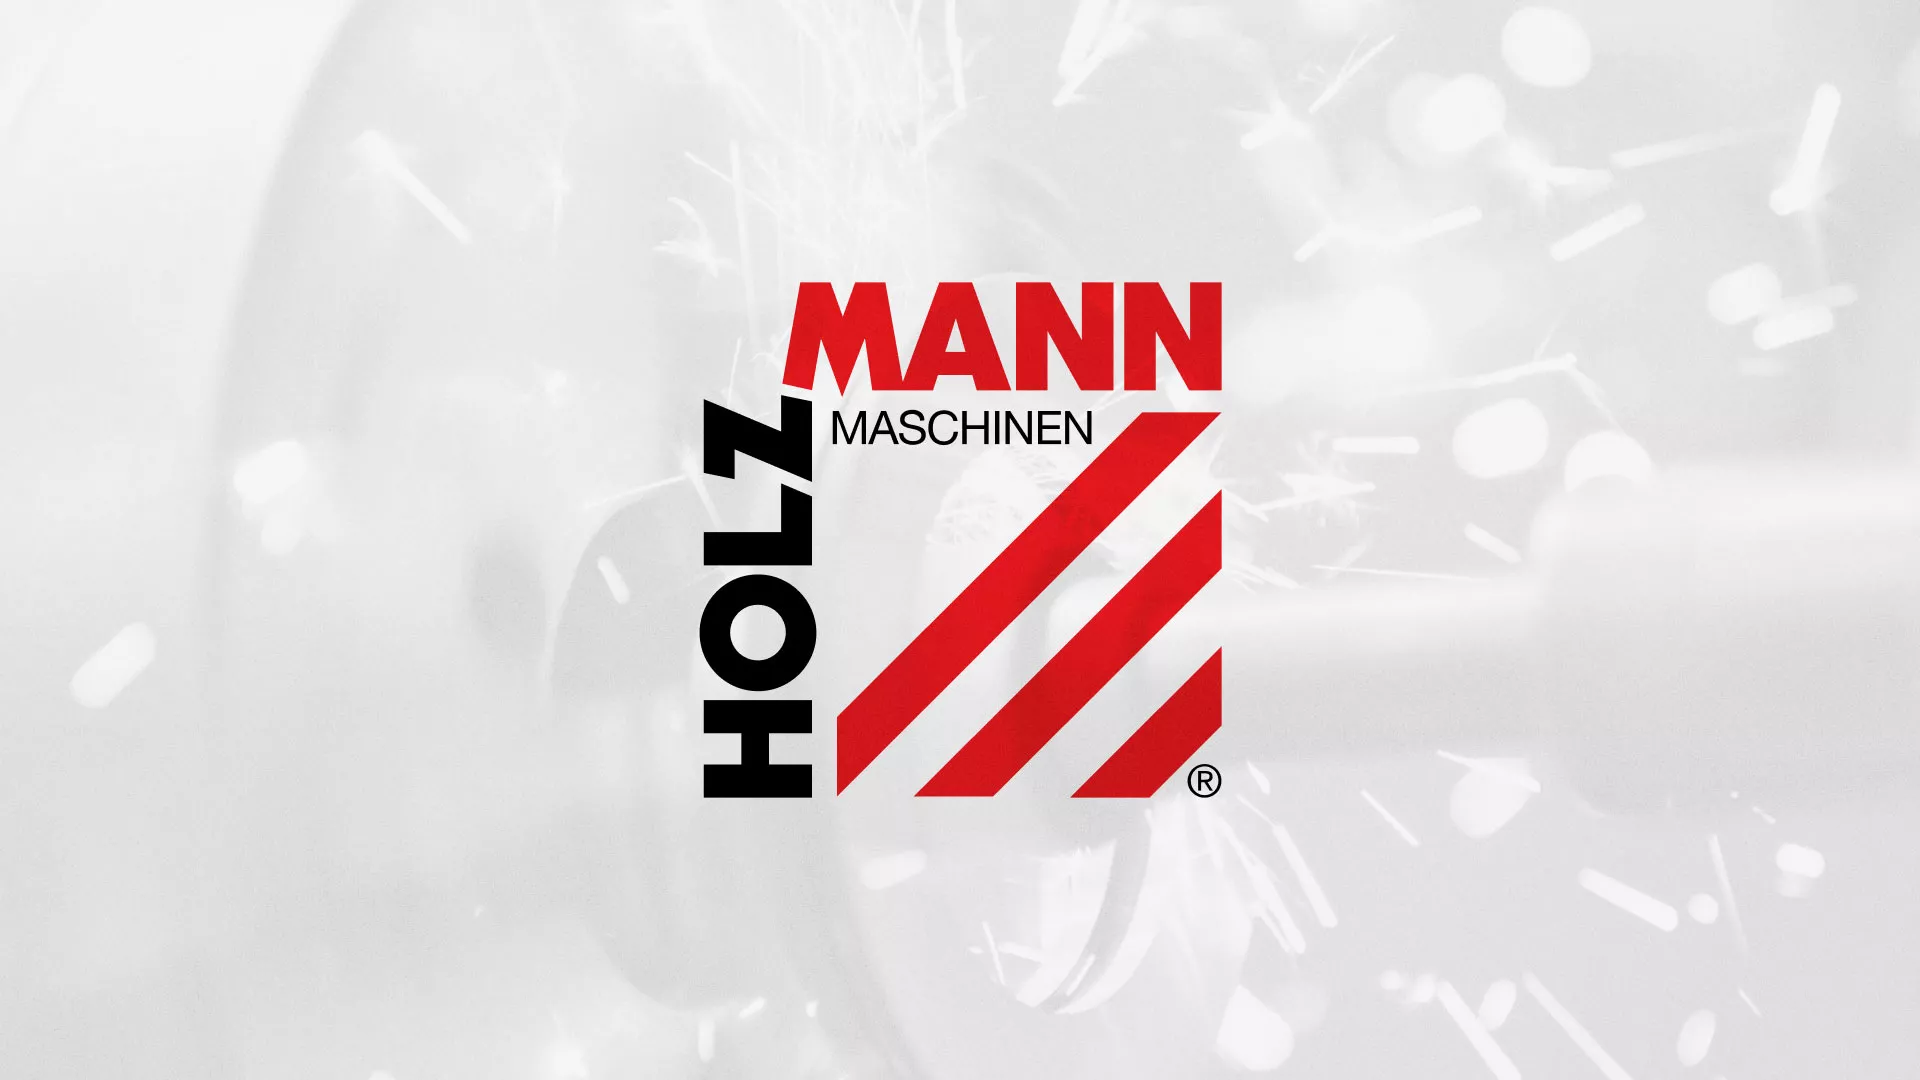 Создание сайта компании «HOLZMANN Maschinen GmbH» в Княгинино